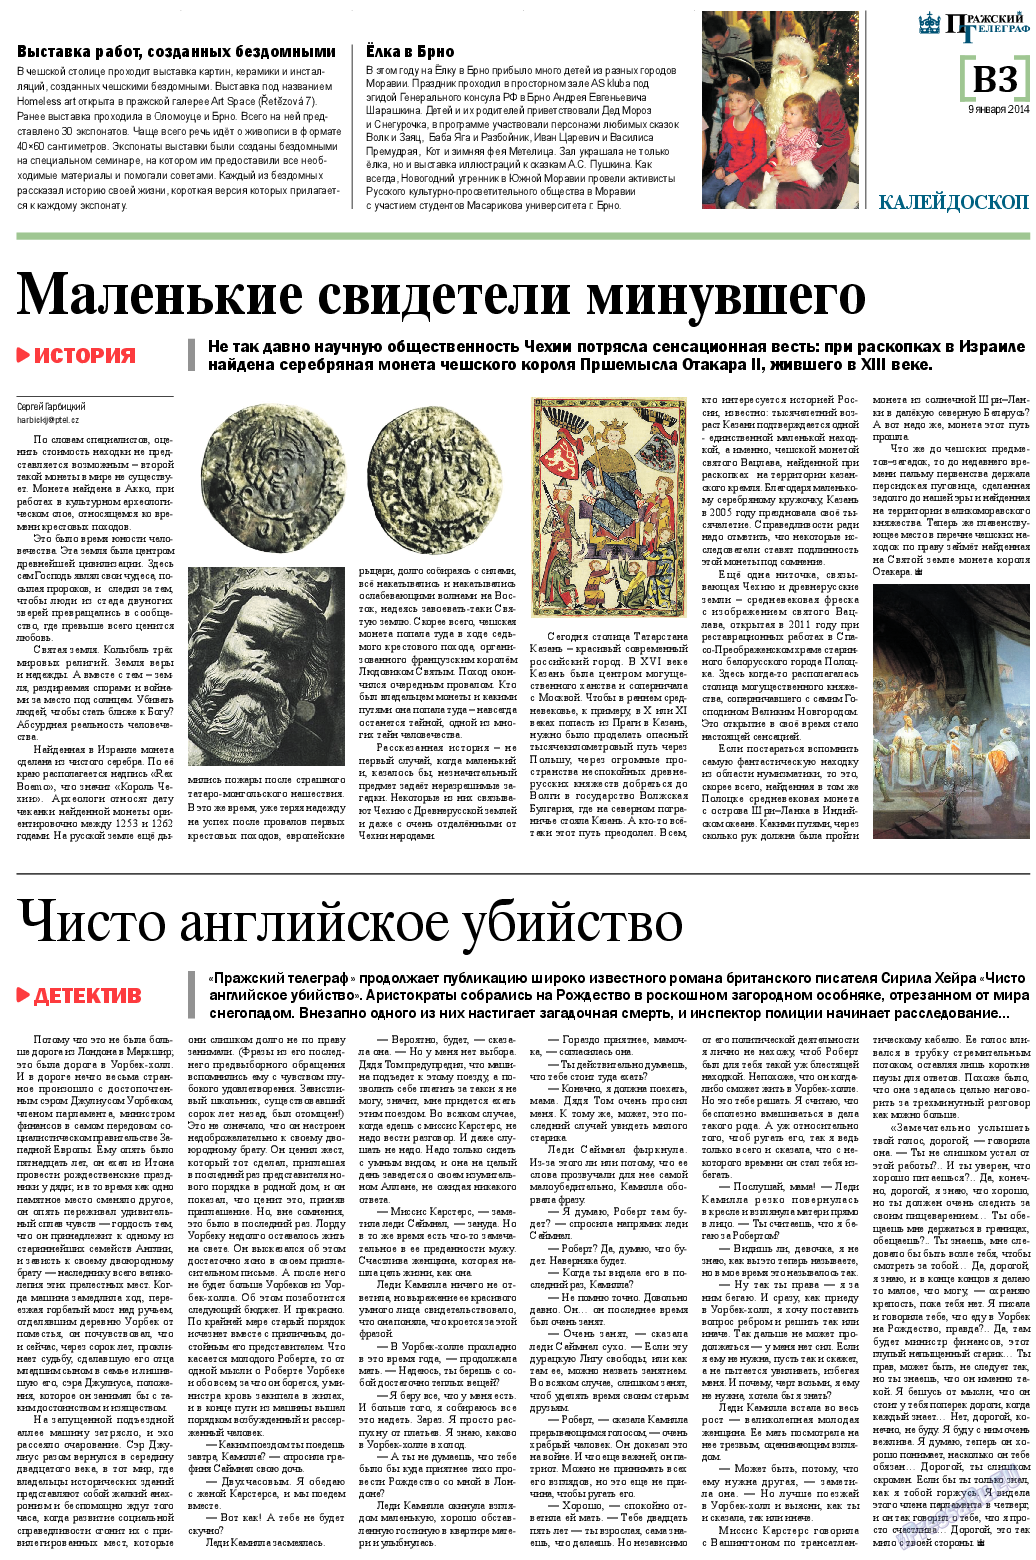 Пражский телеграф, газета. 2014 №2 стр.11